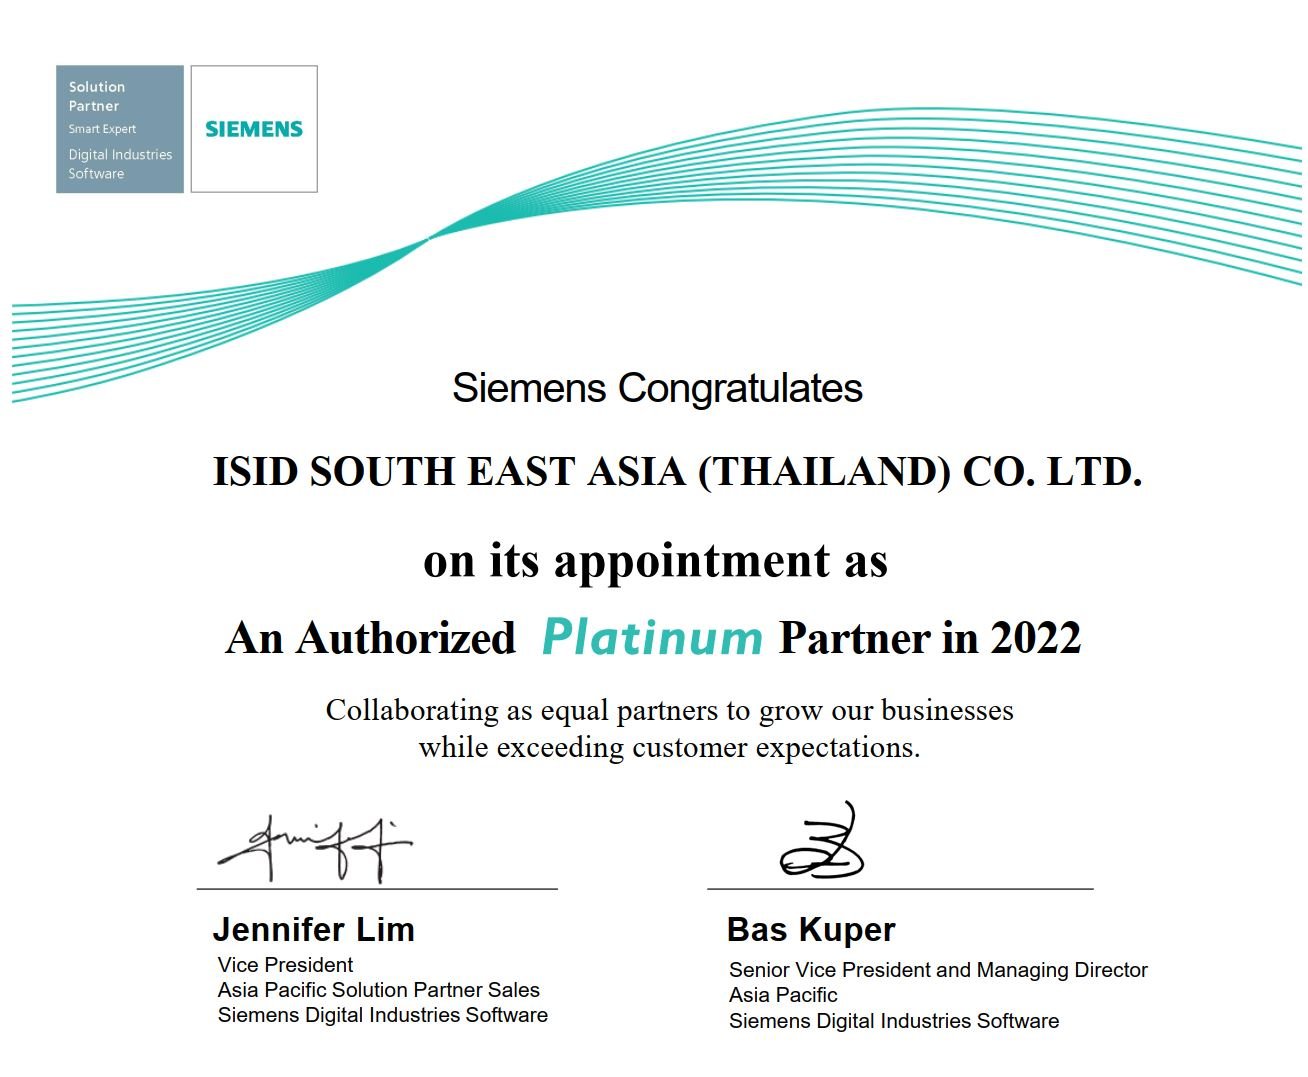 Siemens PLM has awarded ISID South East Asia Thailand